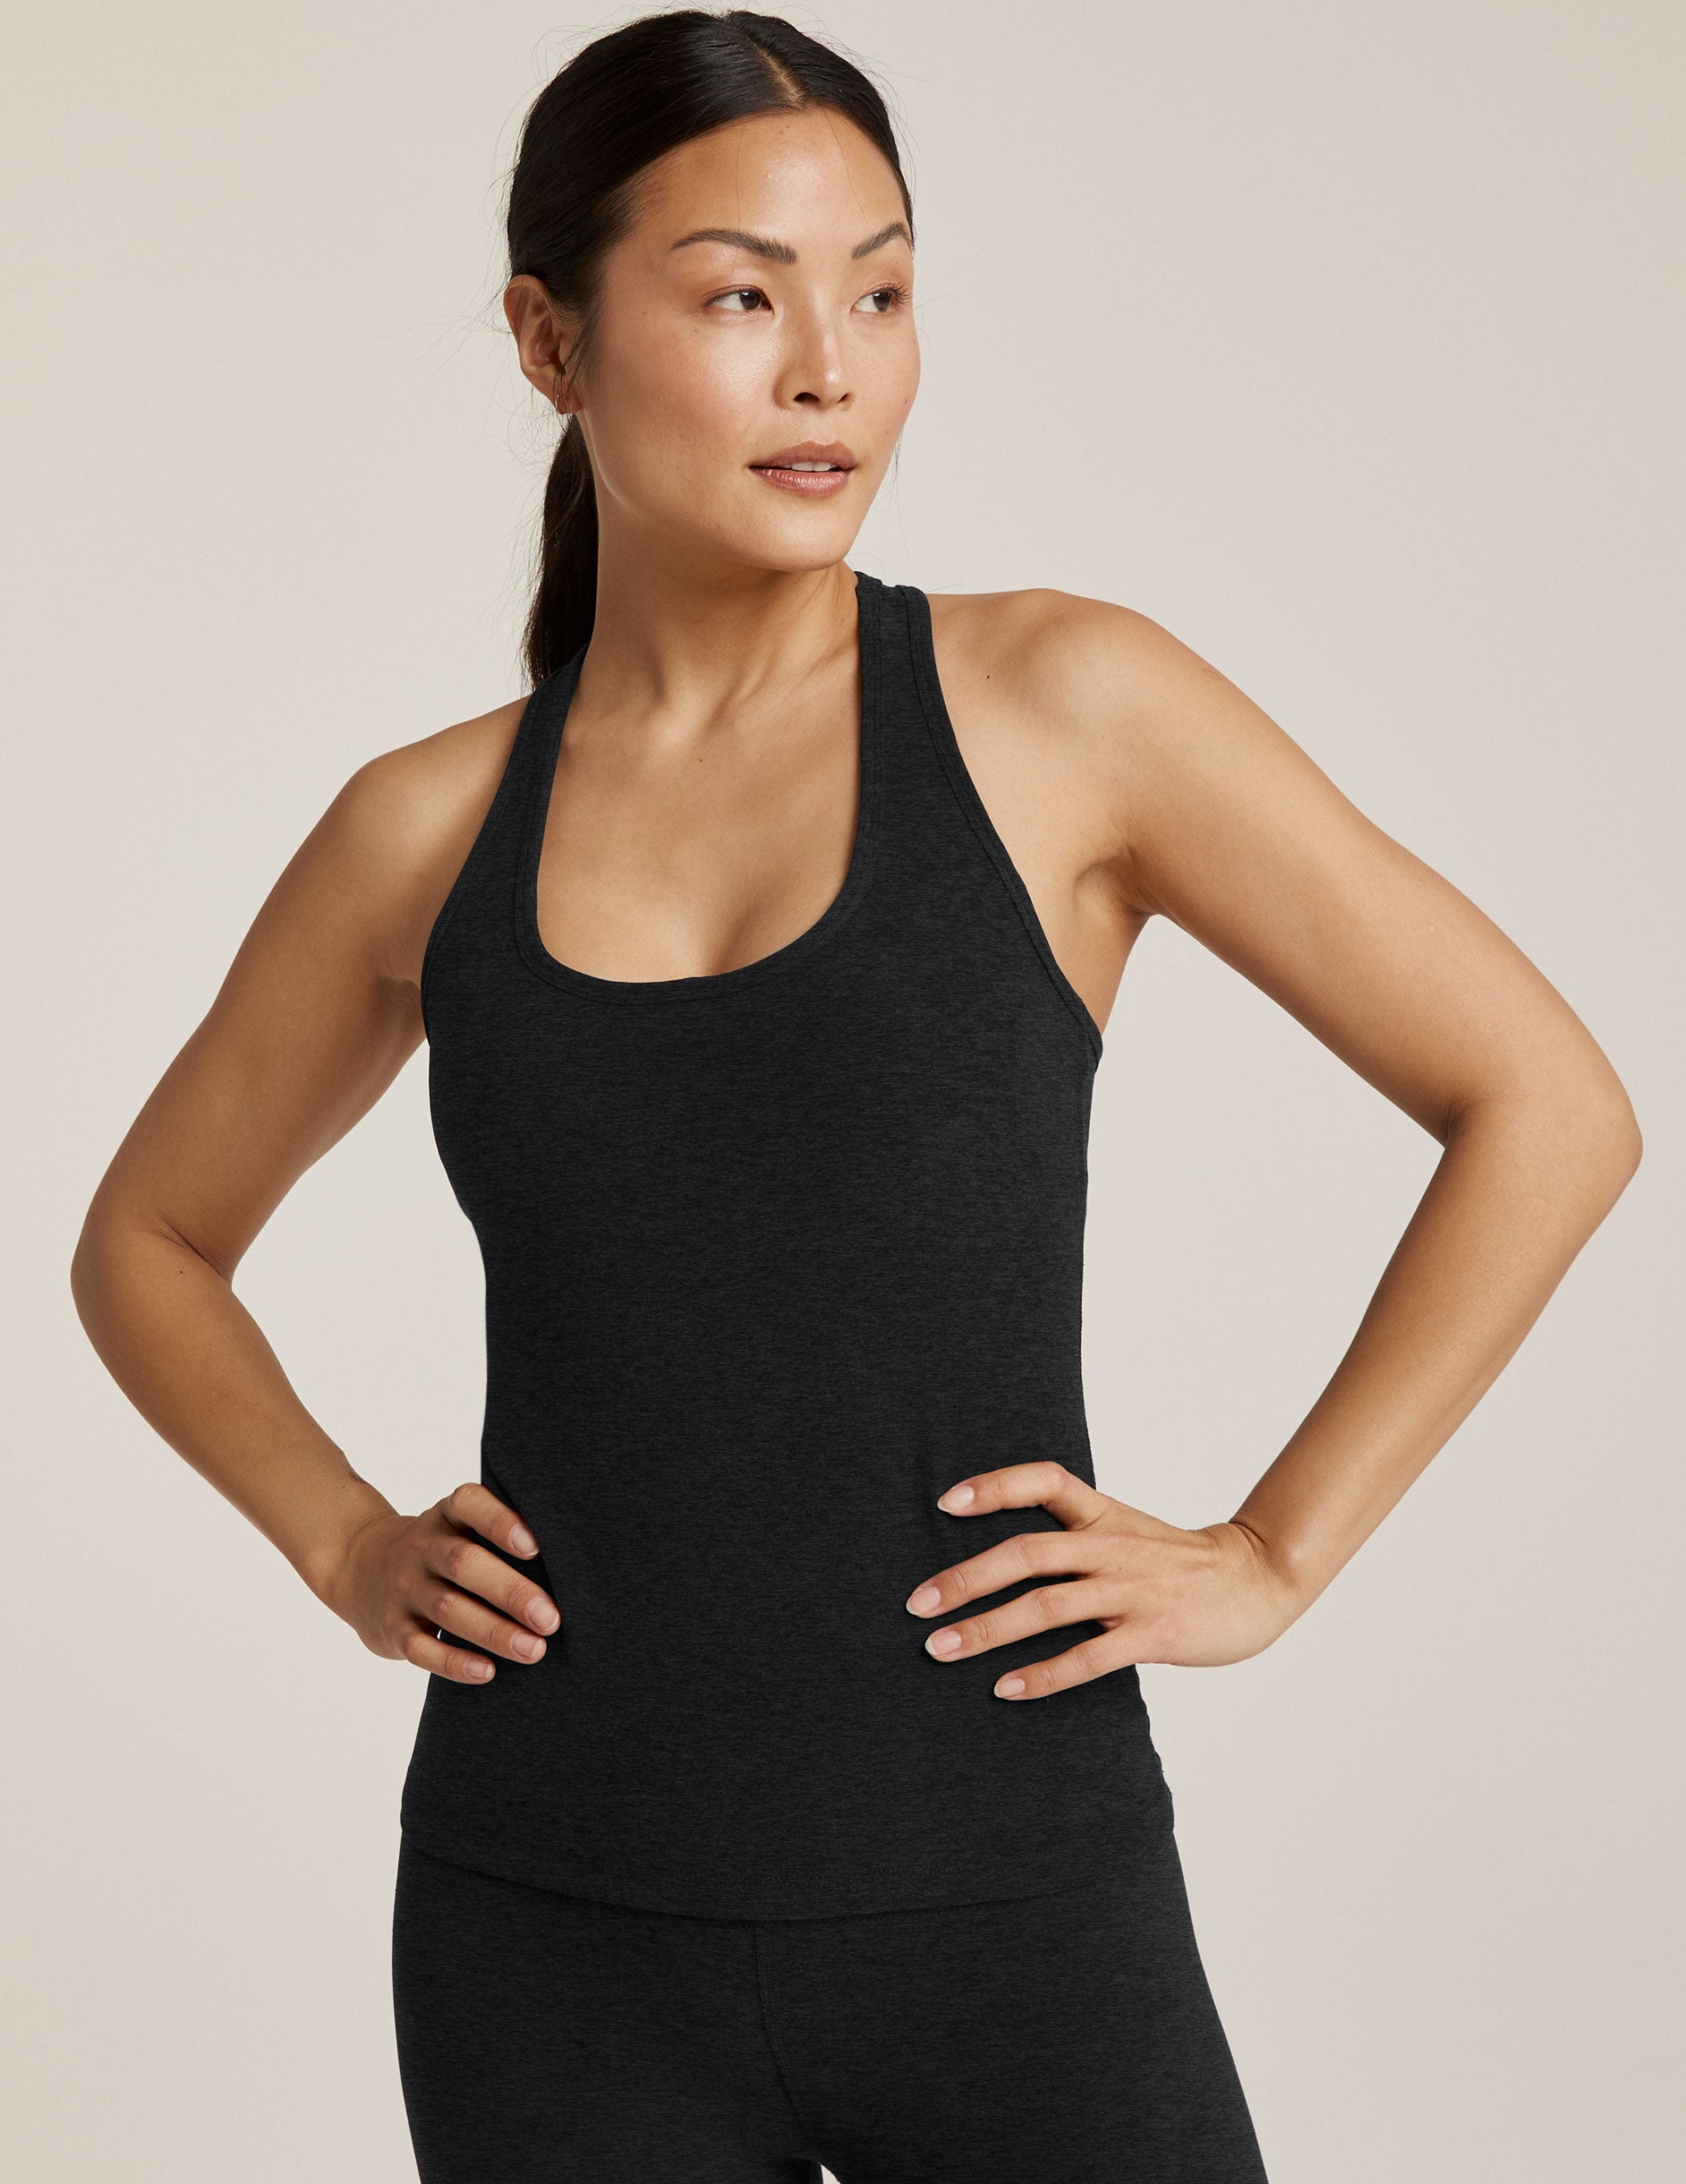 Women's Stretch Cotton Short Sleeve with Built-in Shelf Bra Shirt Yoga T  Tops